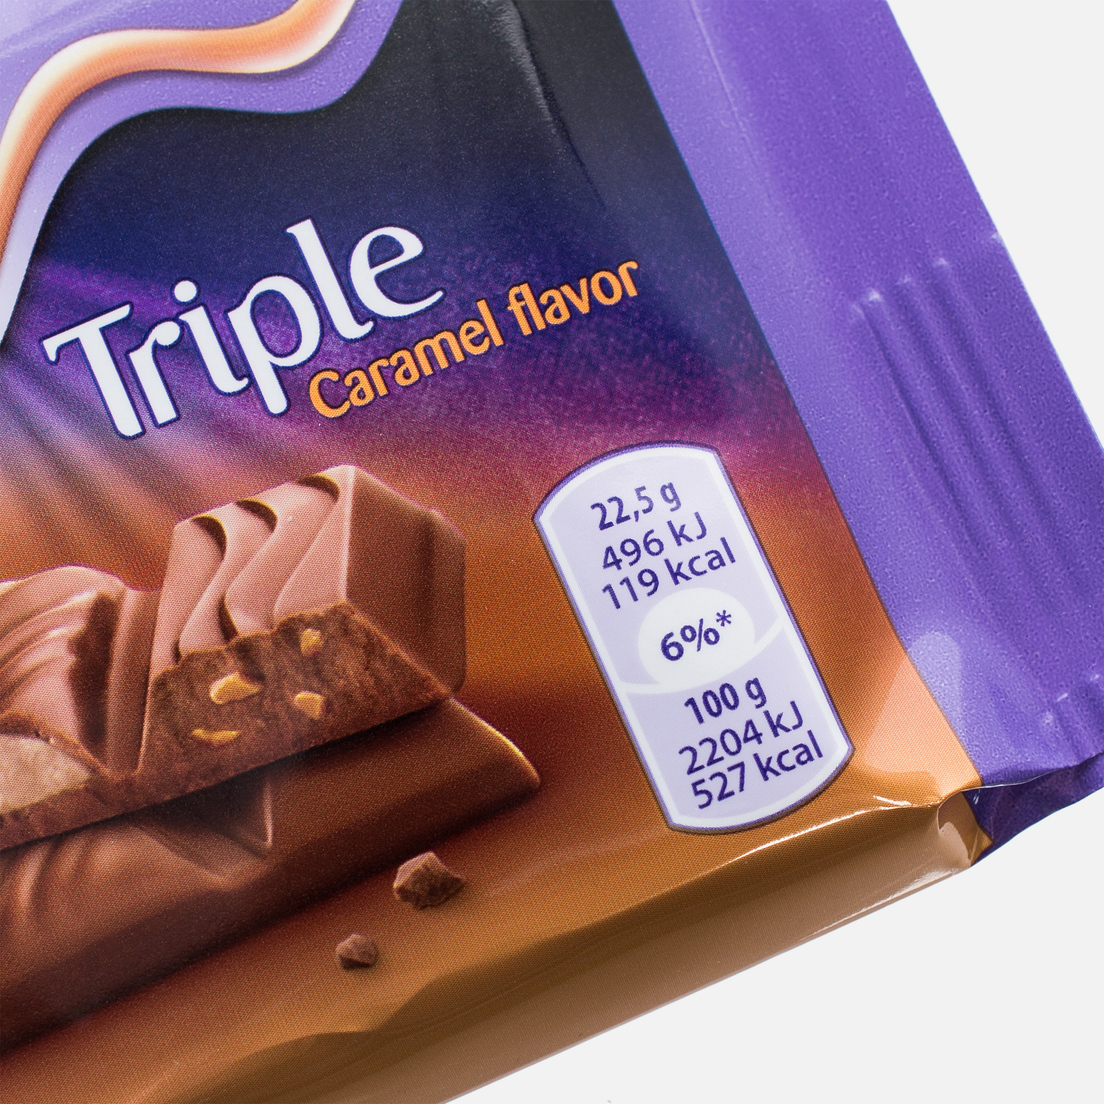 Milka Шоколад Triple Caramel 100g